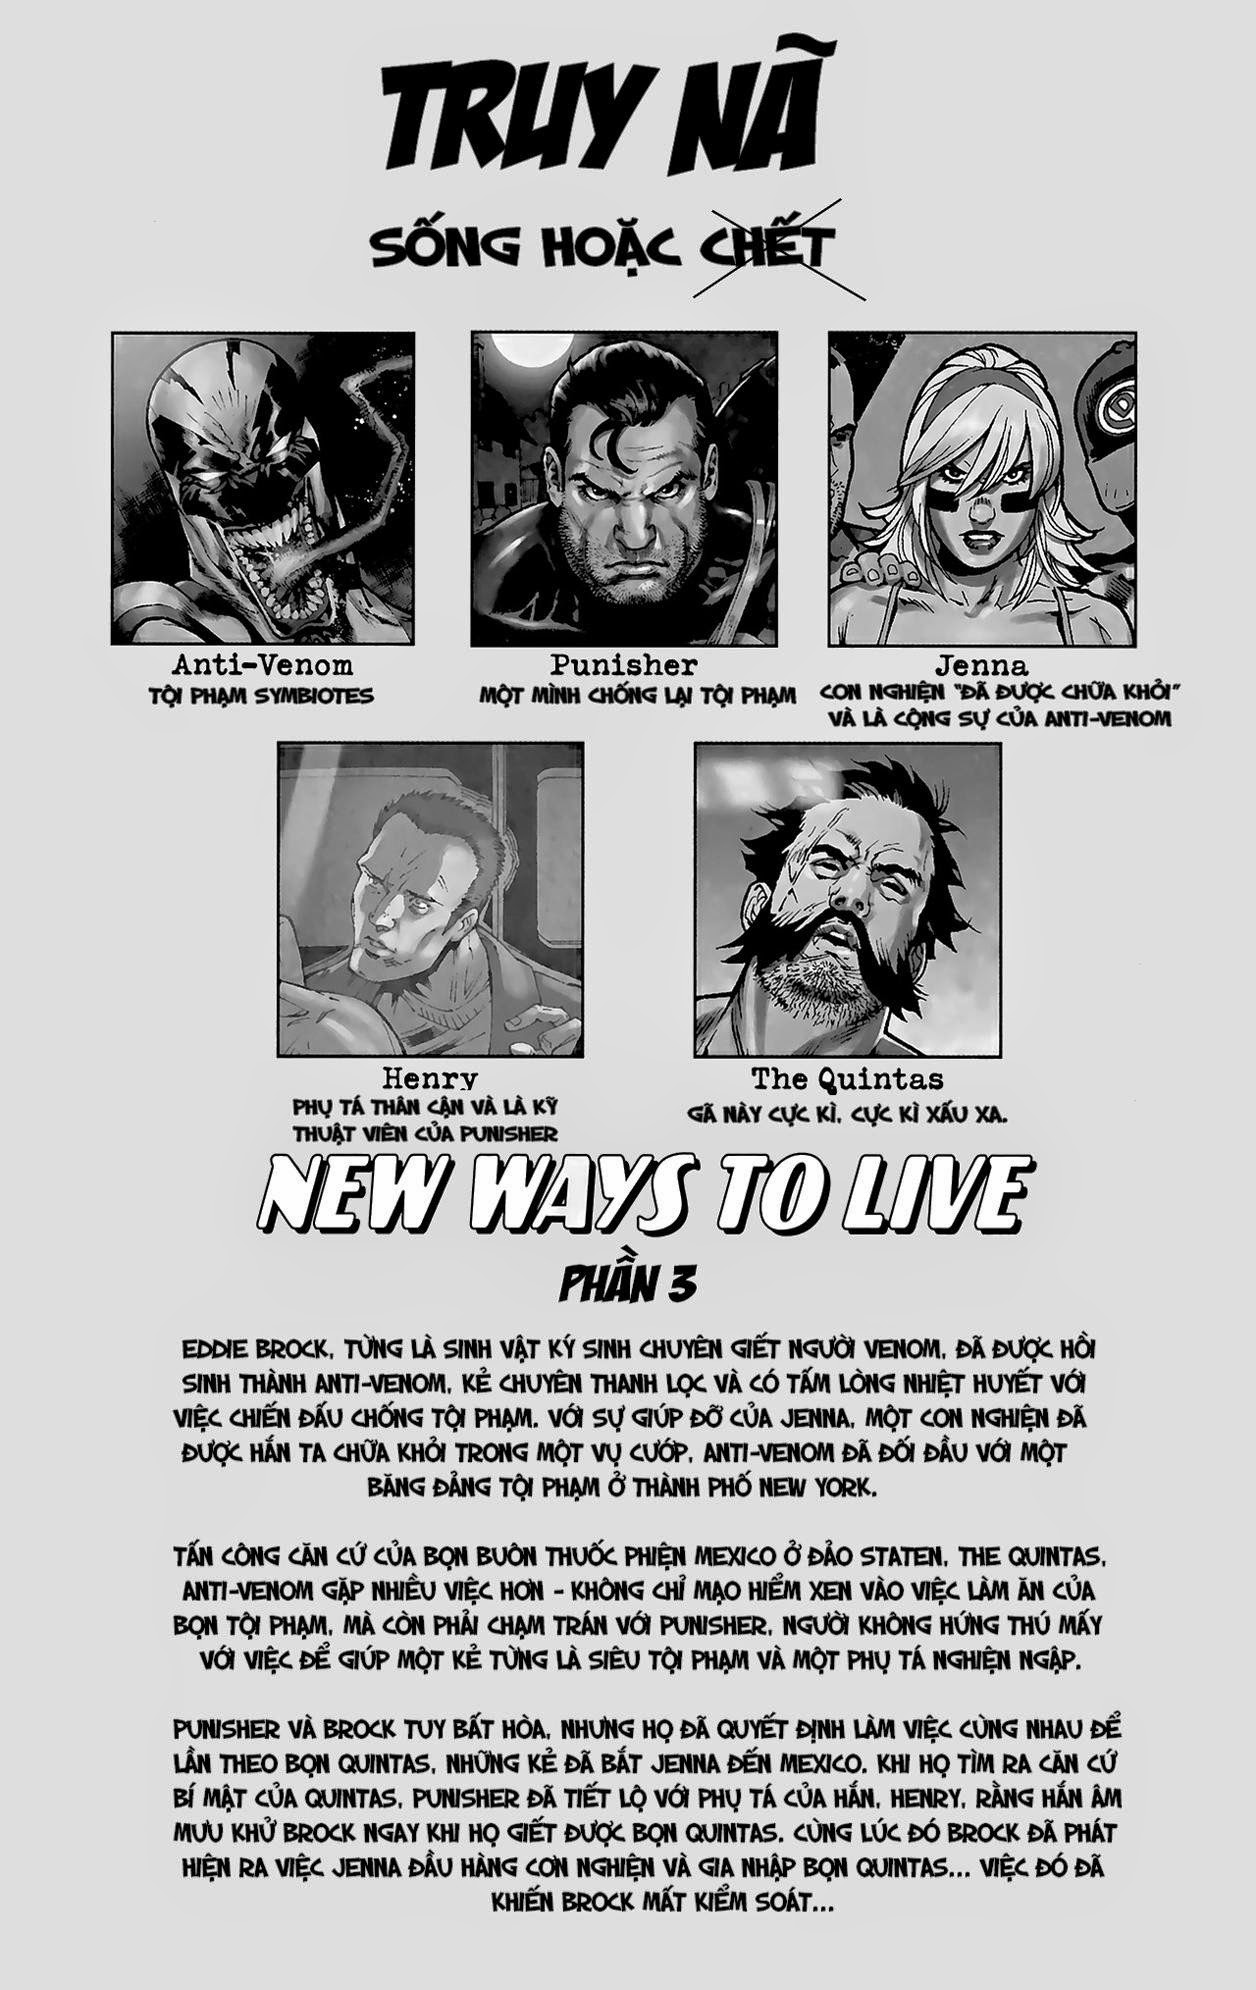 Anti-Venom - New Ways to Live chapter 3 trang 2